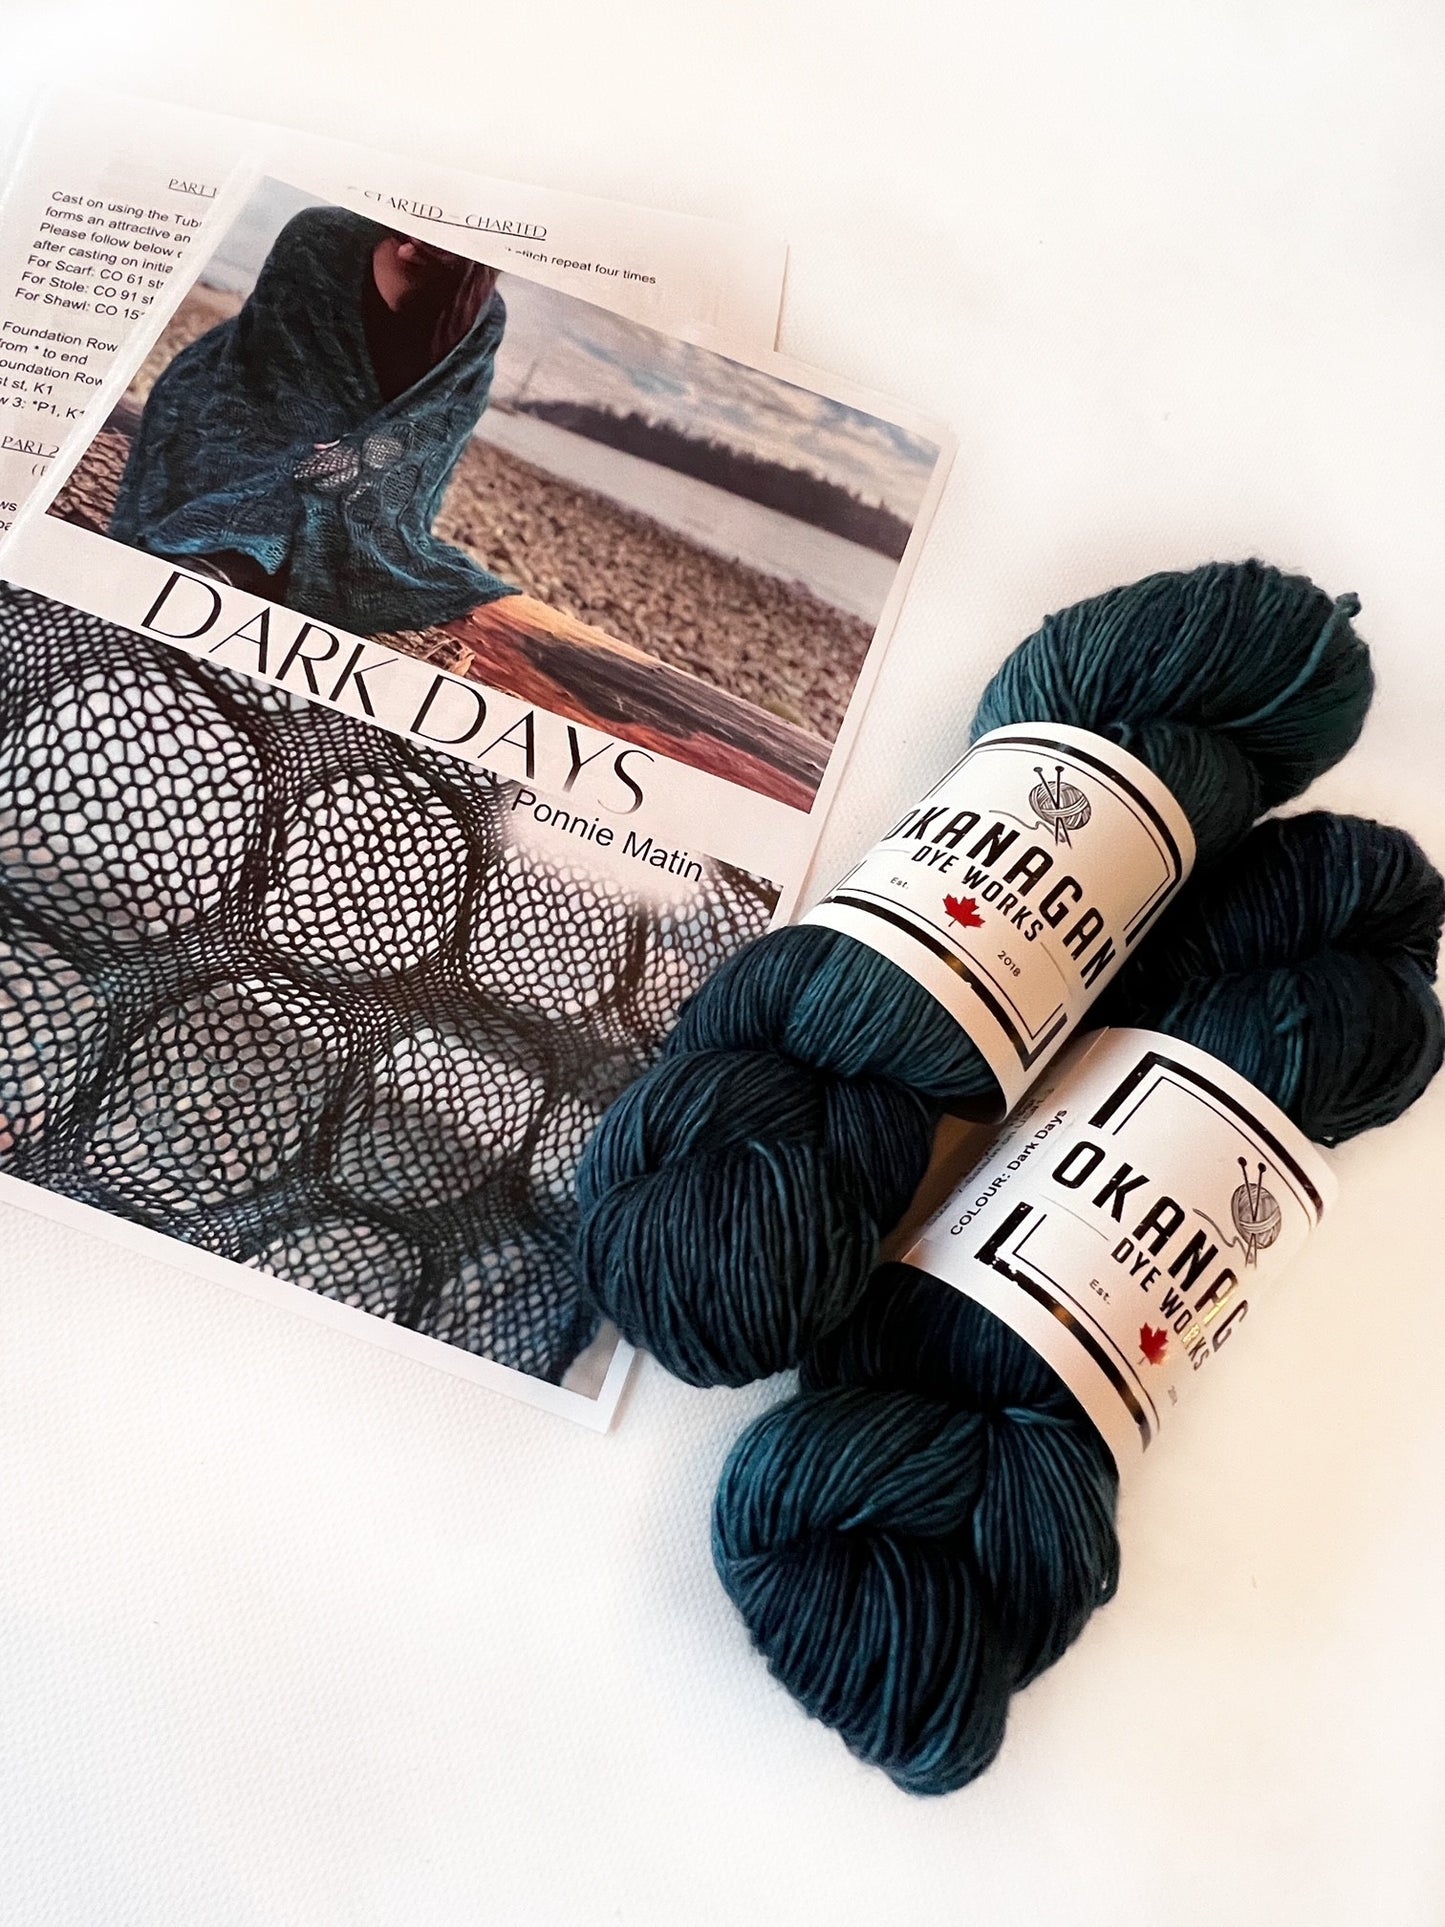 Dark Days Shawl Kit - Pattern and Yarn - Okanagan Dye Works